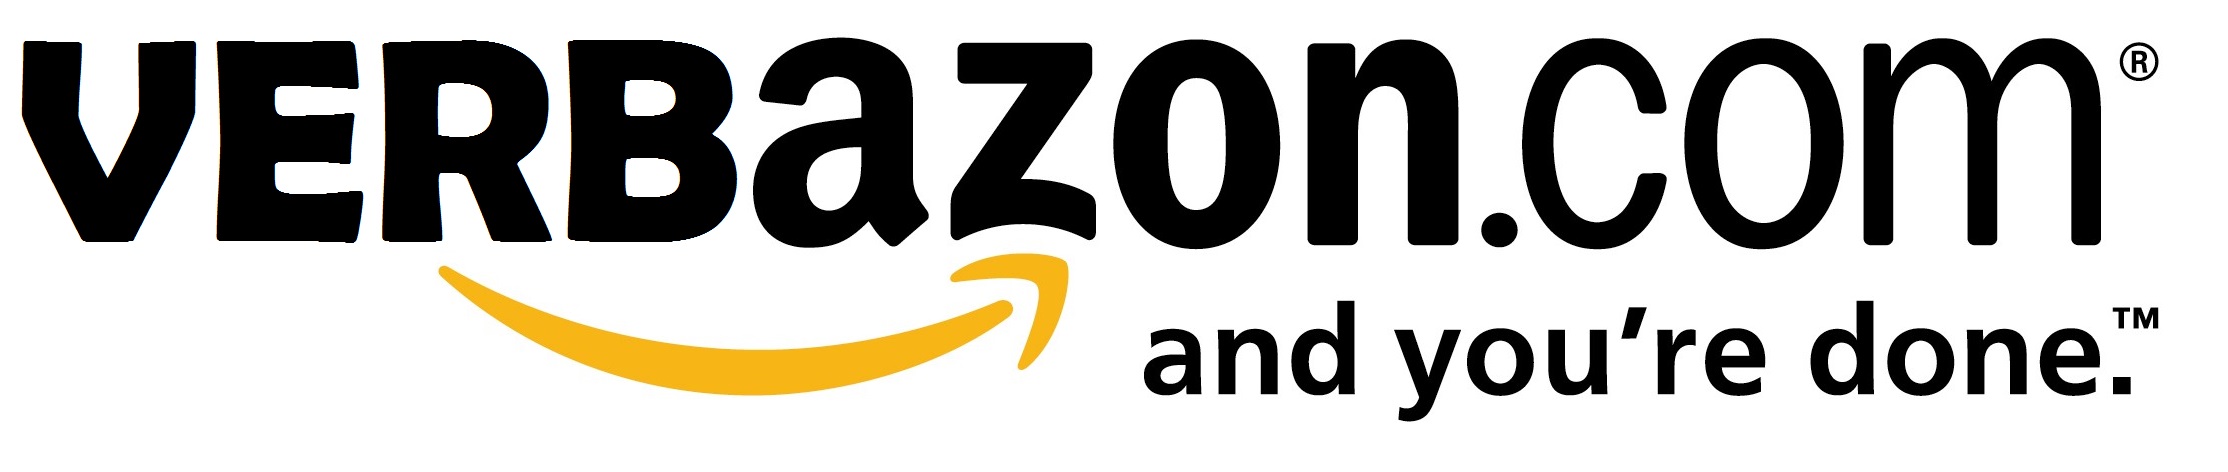 290552873_Amazon_logo.jpg